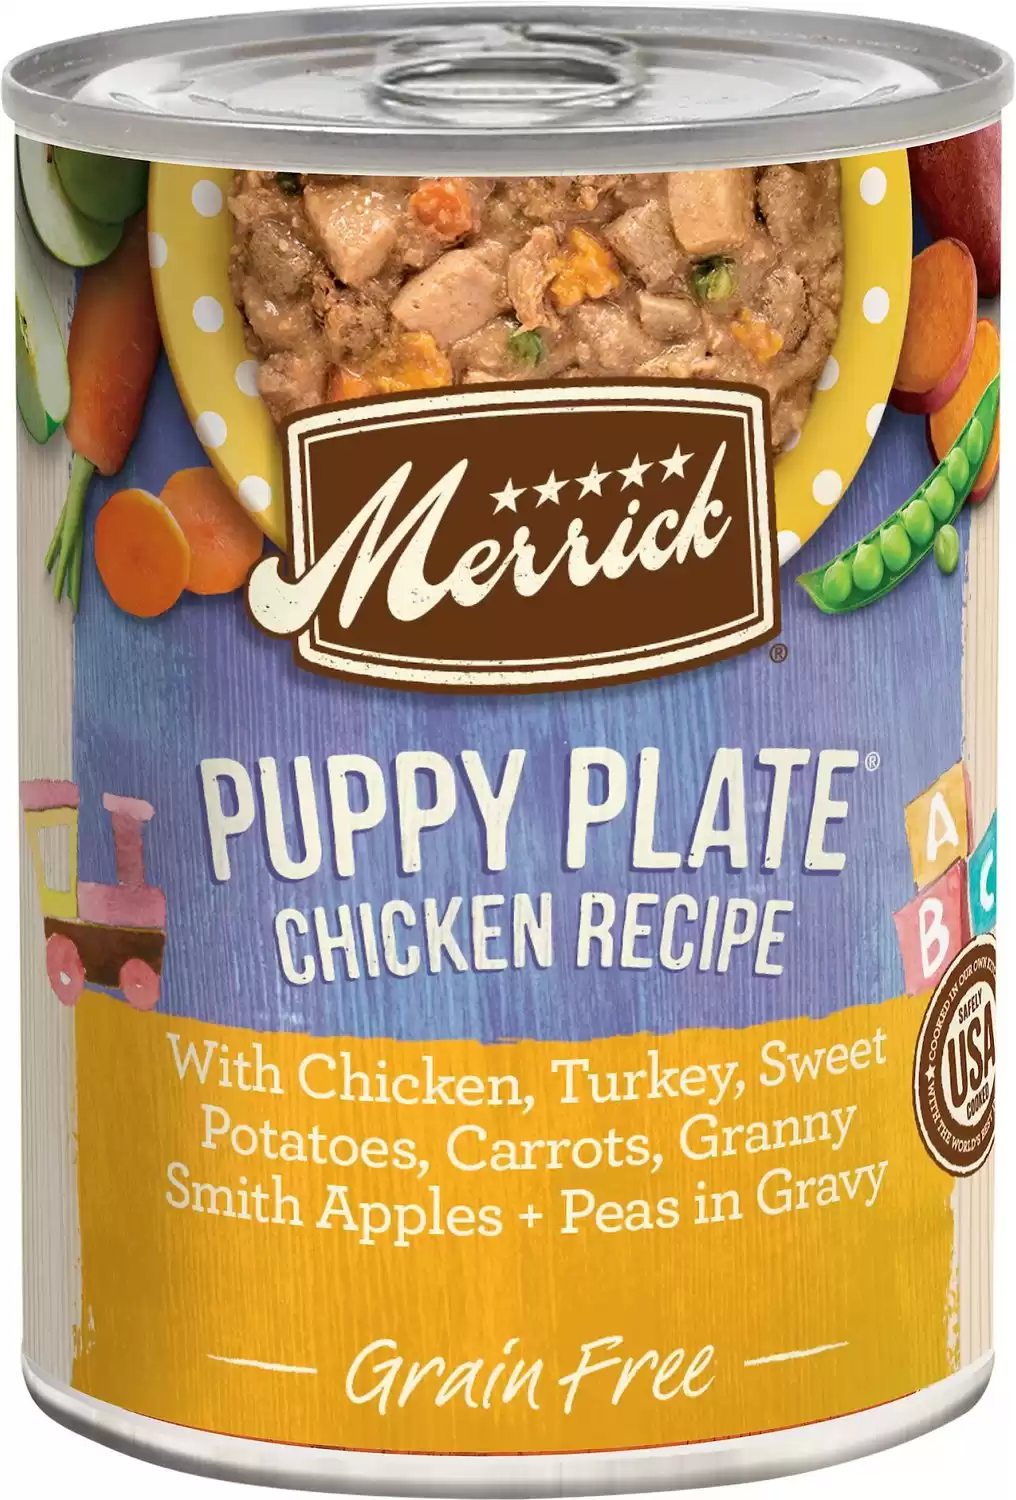 Merrick Puppy Plate Chicken Recipe